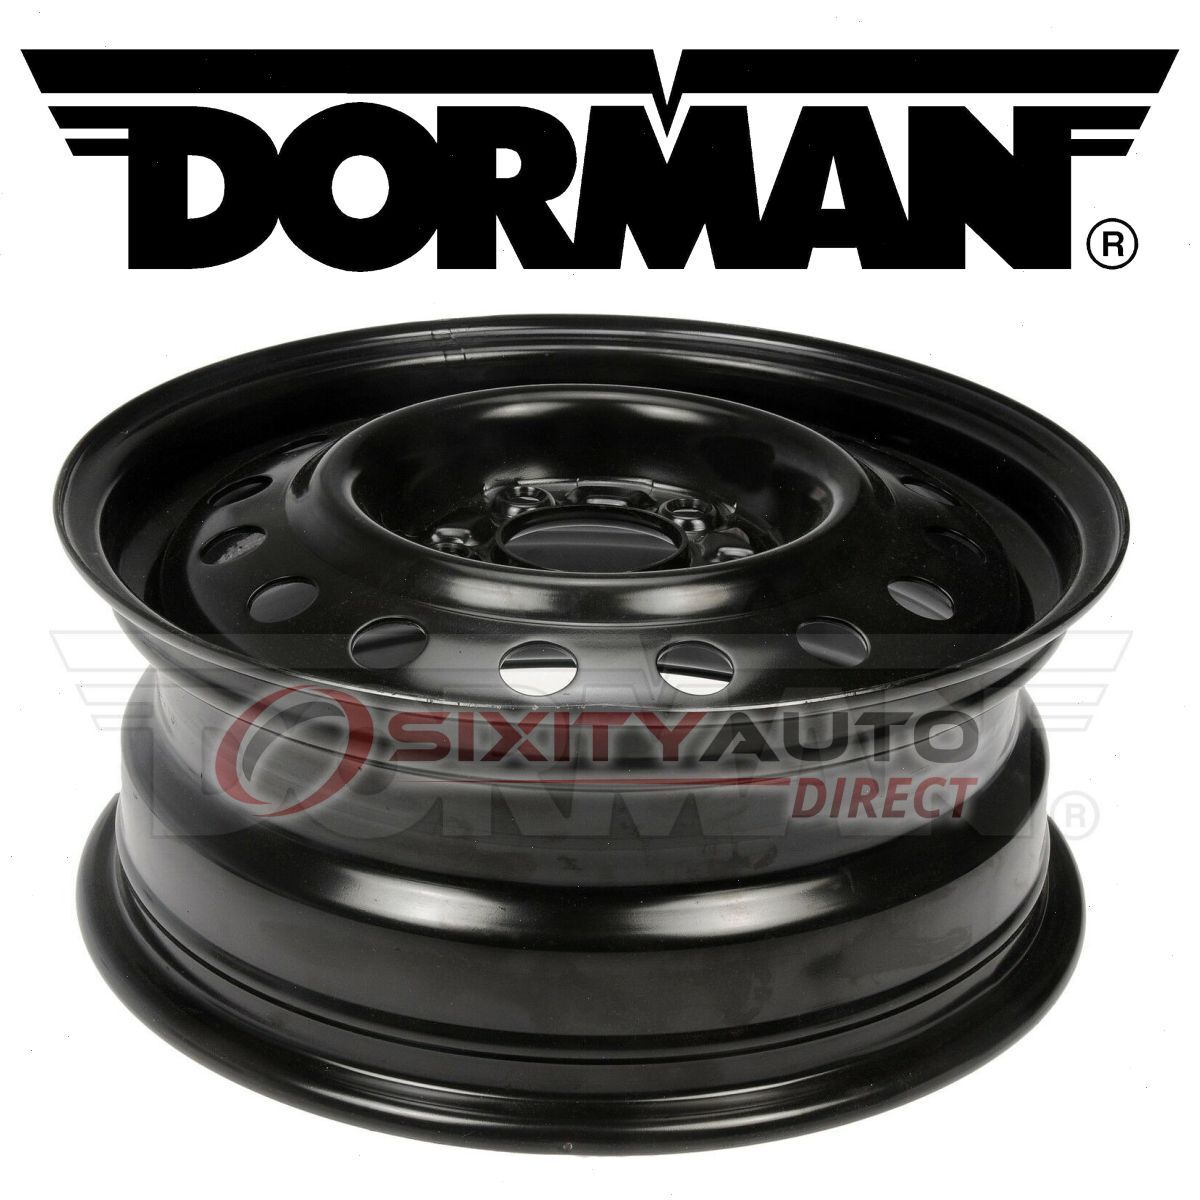 Dorman Wheel for 1991-1996 Buick Park Avenue Tire  mv